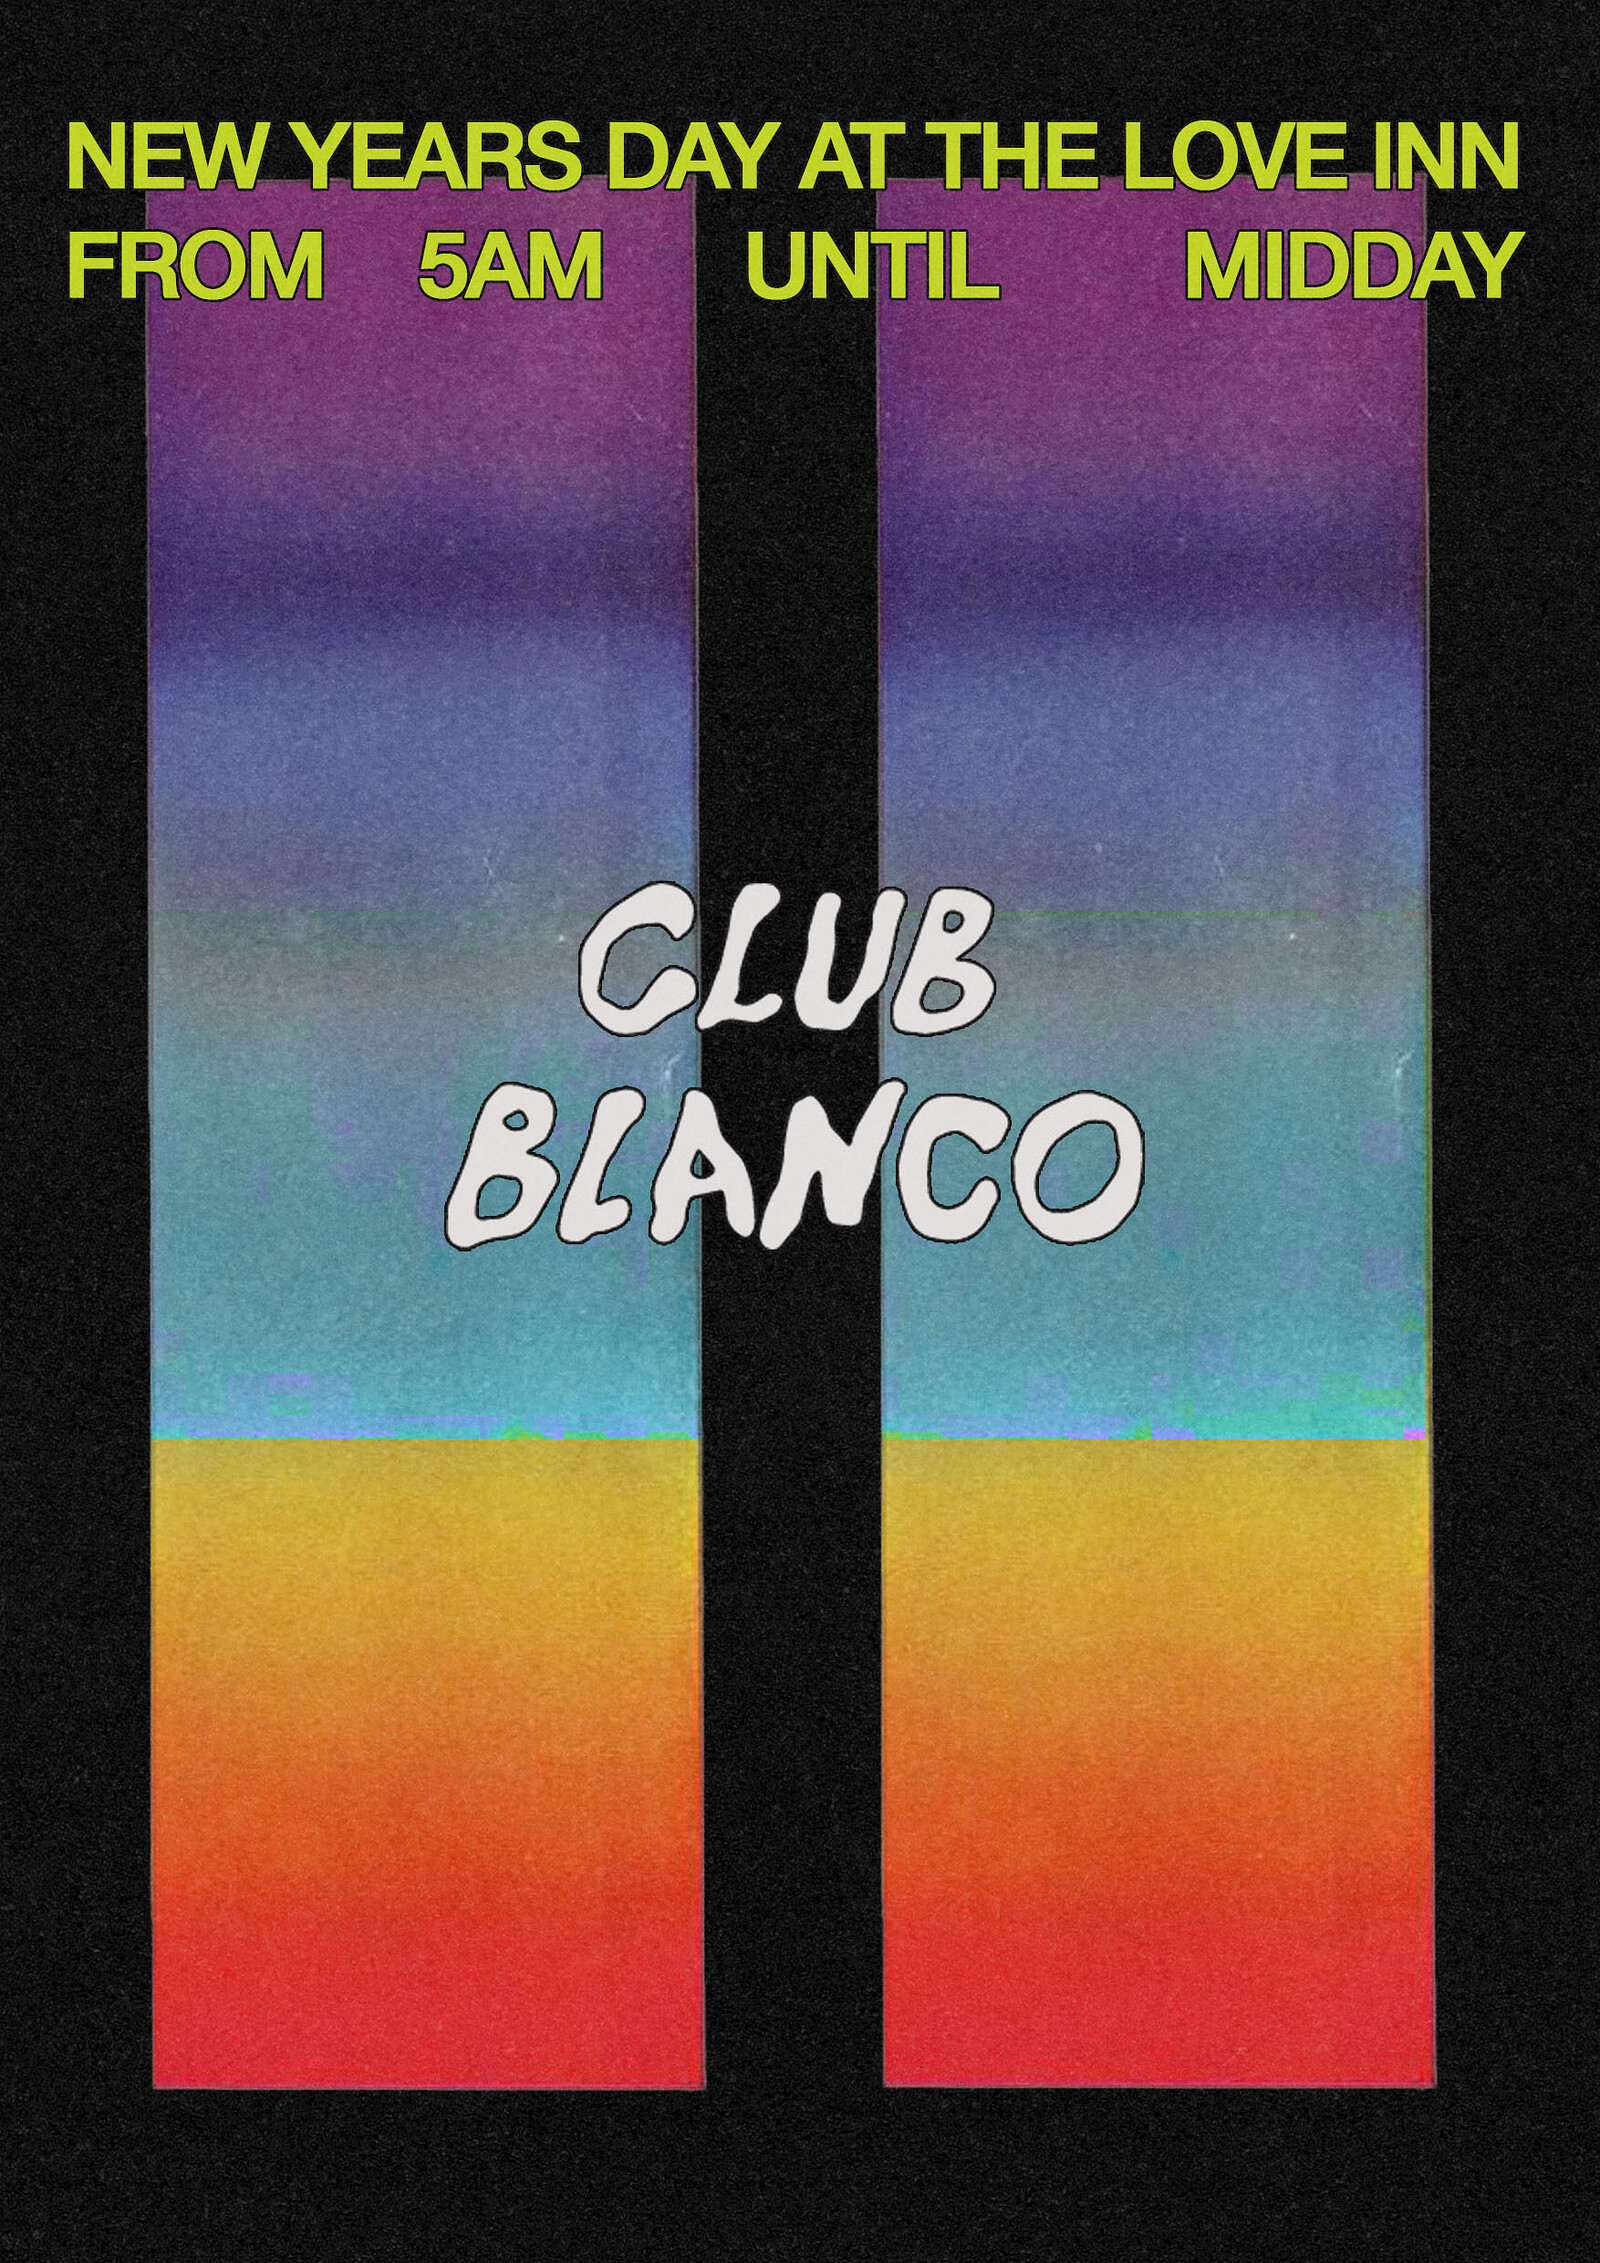 Club Blanco NYD Breakfast at The Love Inn